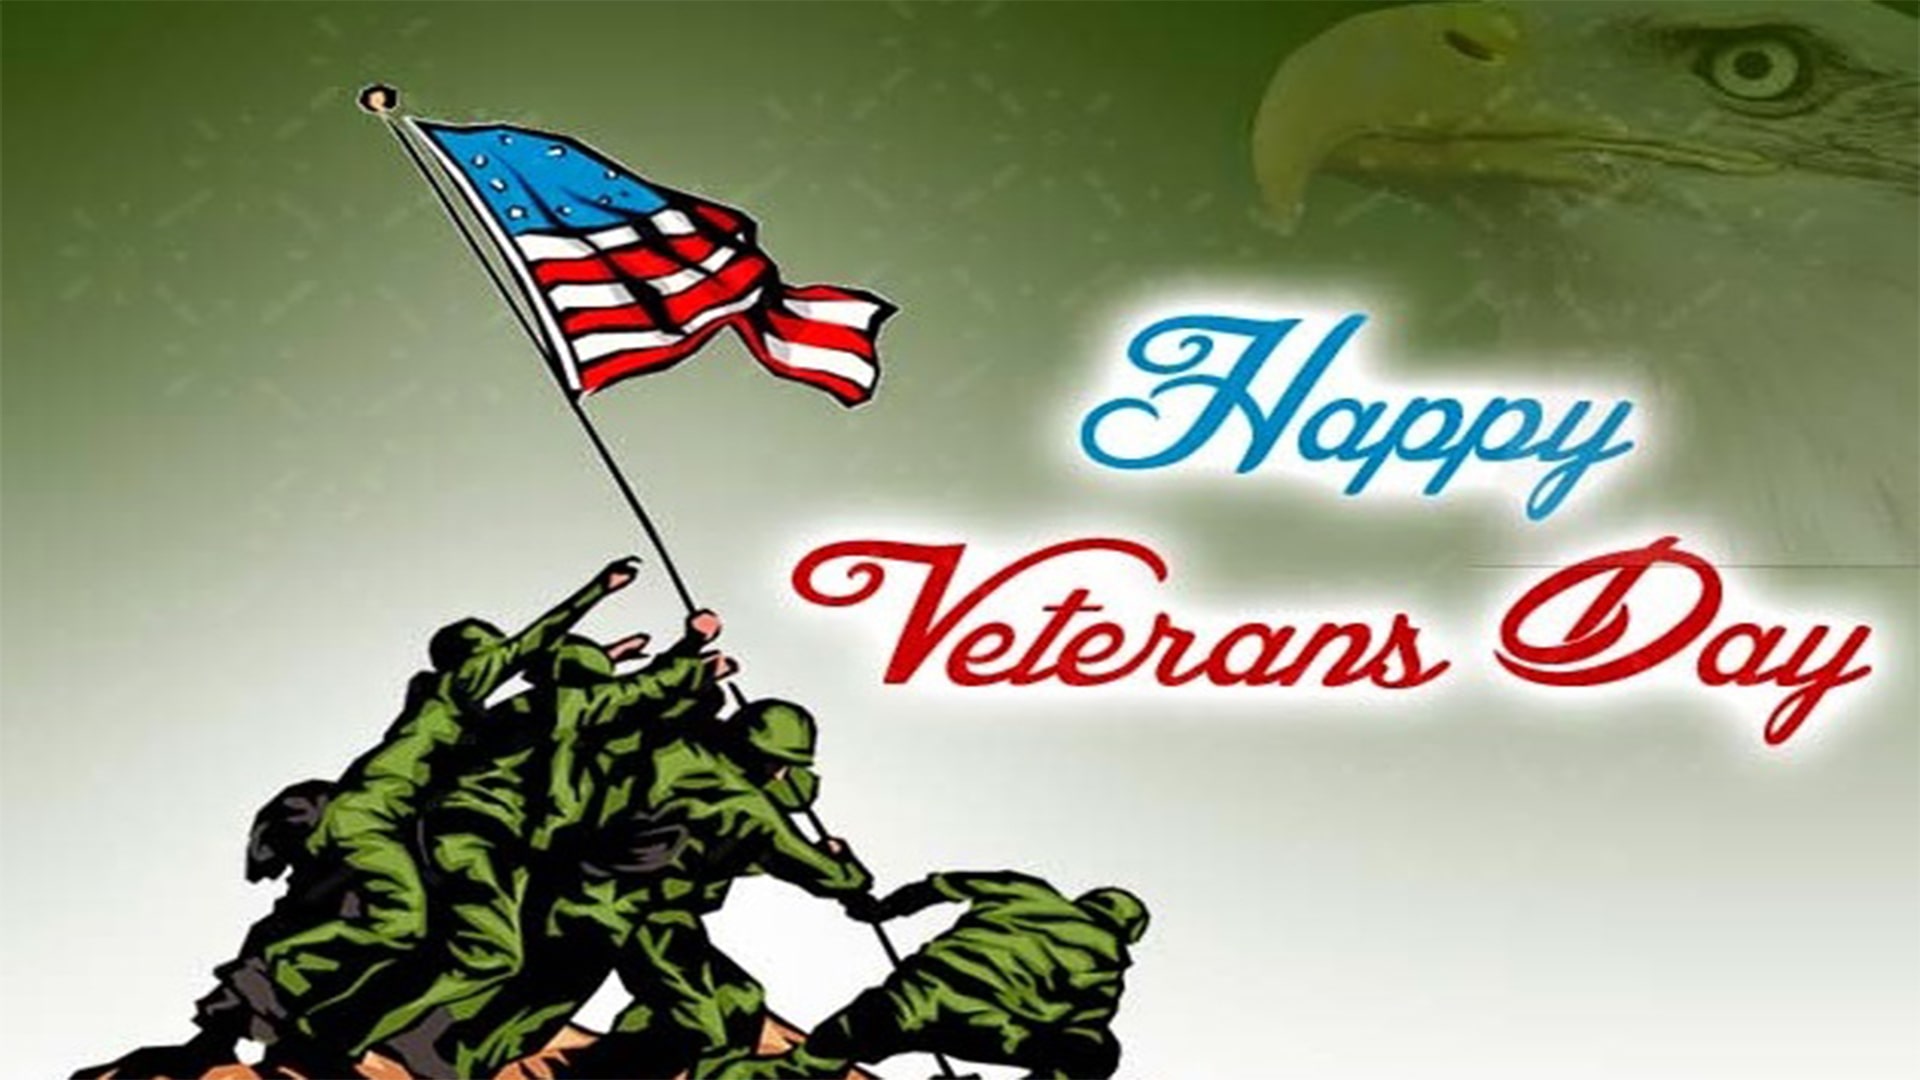 Veterans Day Wallpaper HD